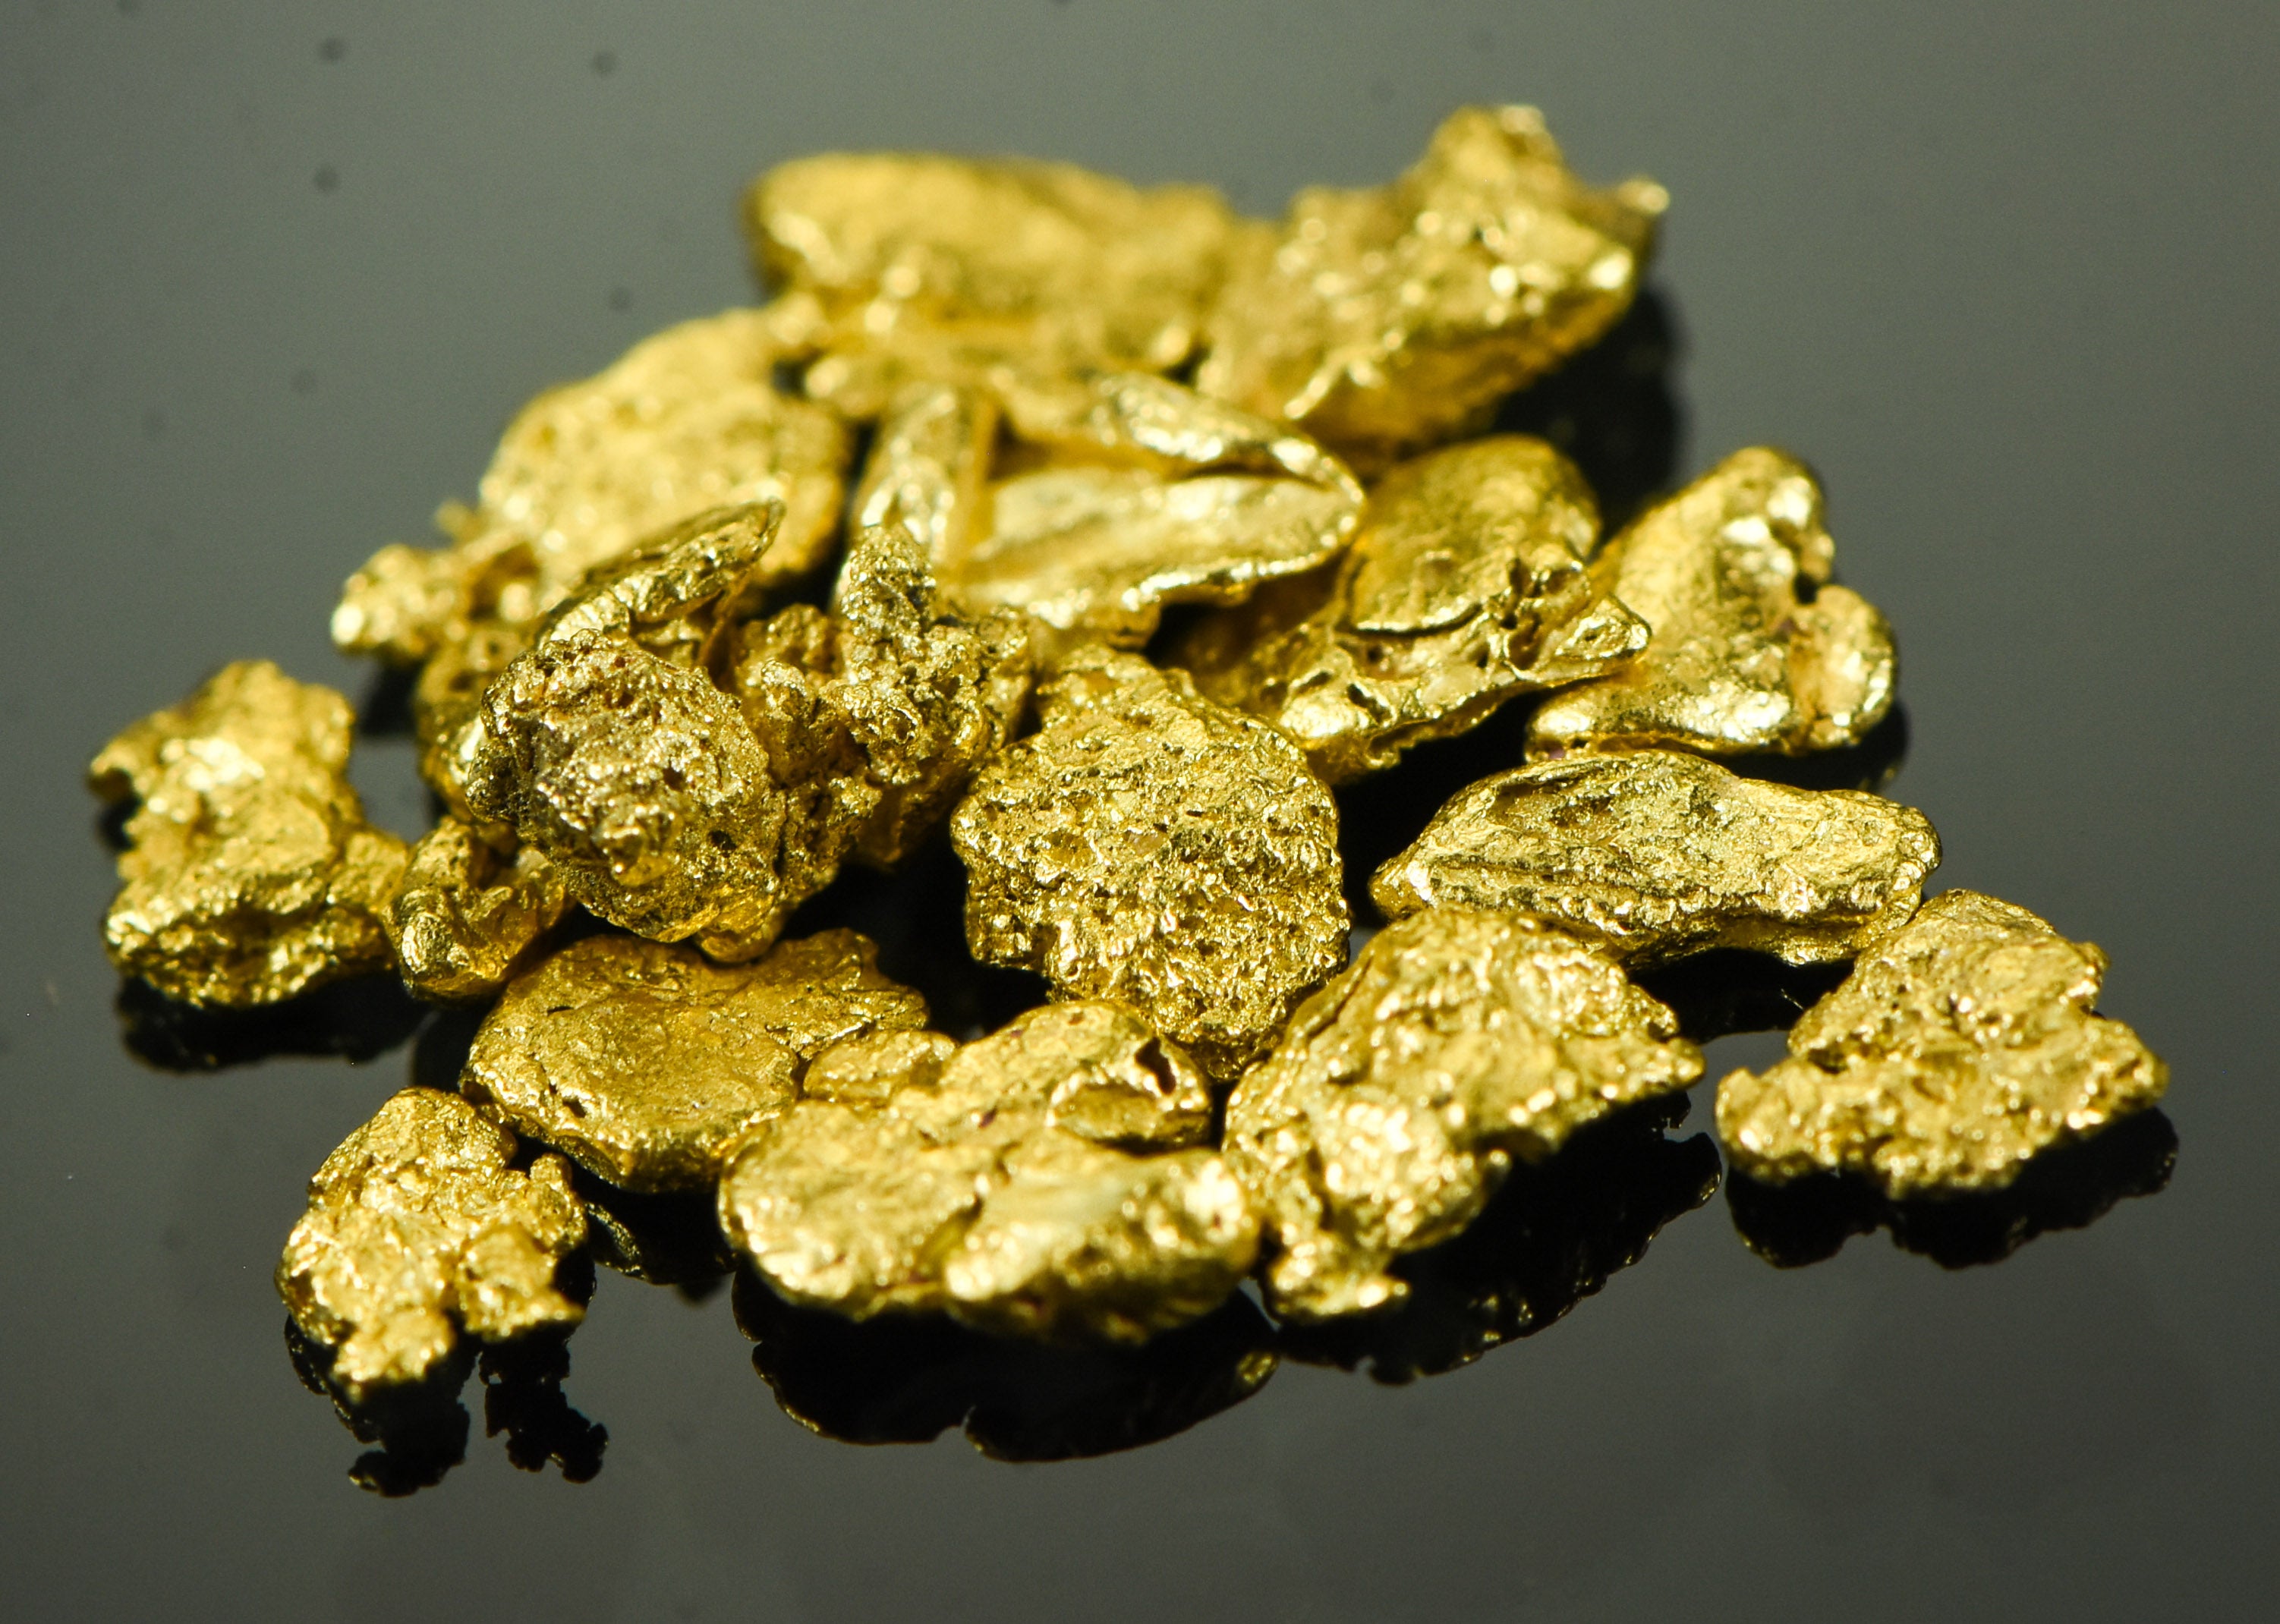 Alaskan Yukon Gold Rush Nuggets #8 Mesh 2 Grams of Fines